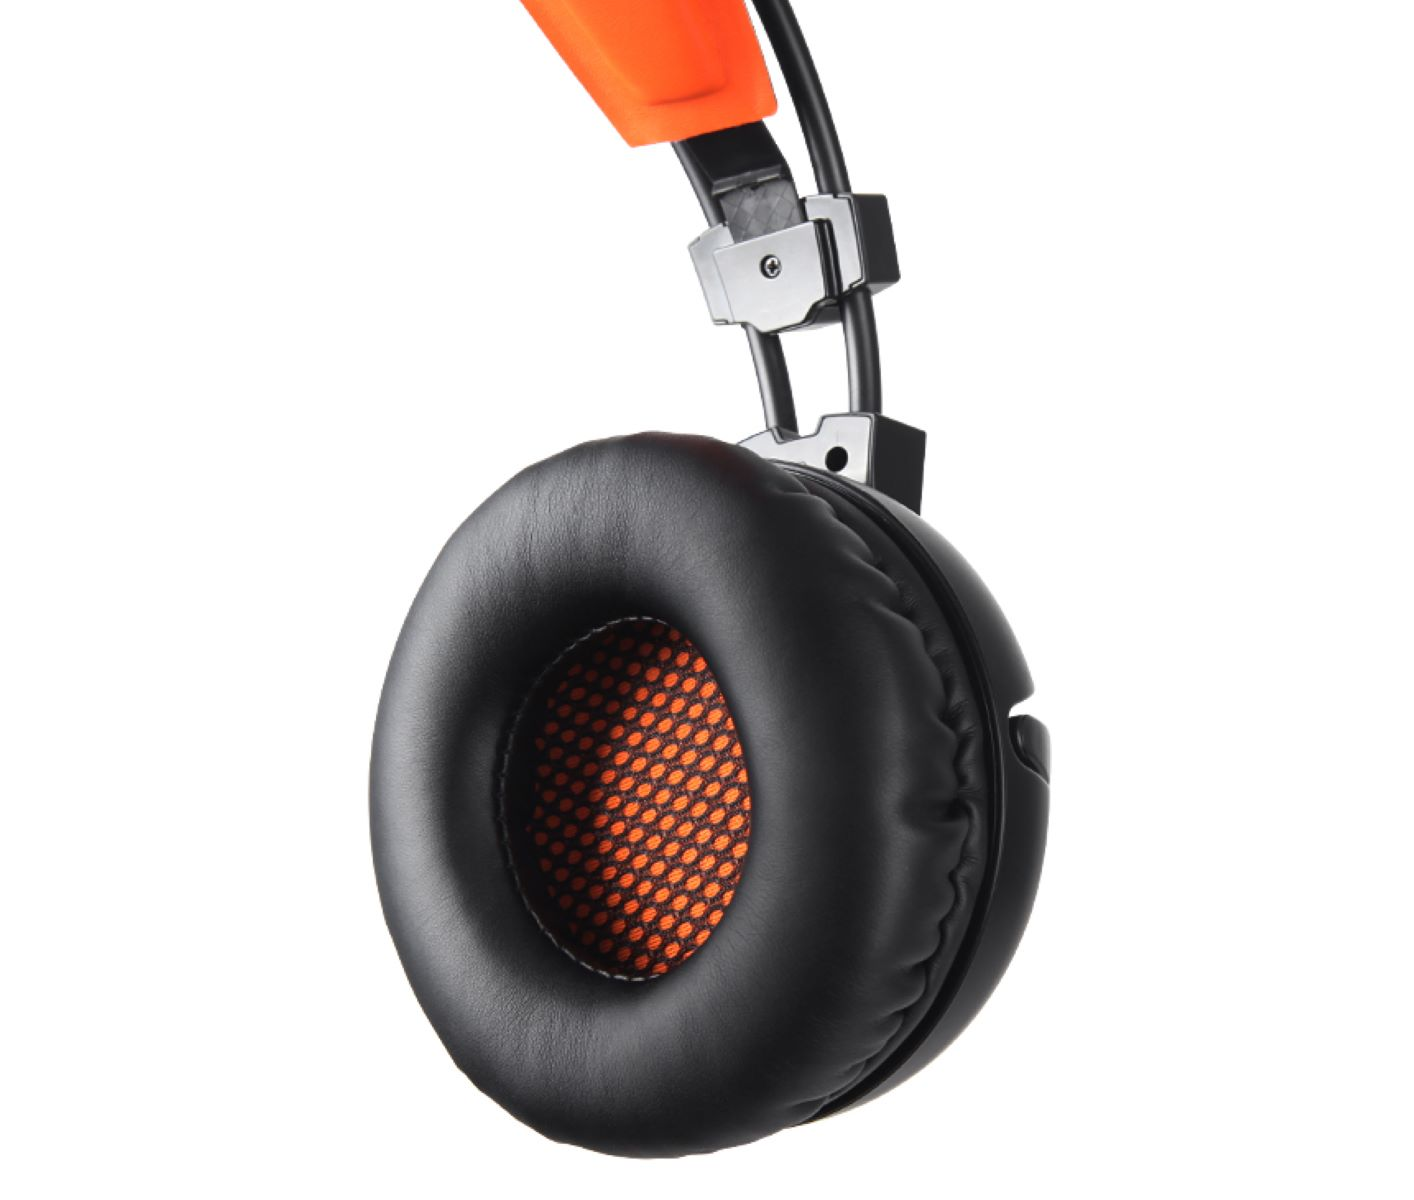 SADES Gaming A6, Over-ear schwarz/orange Headset